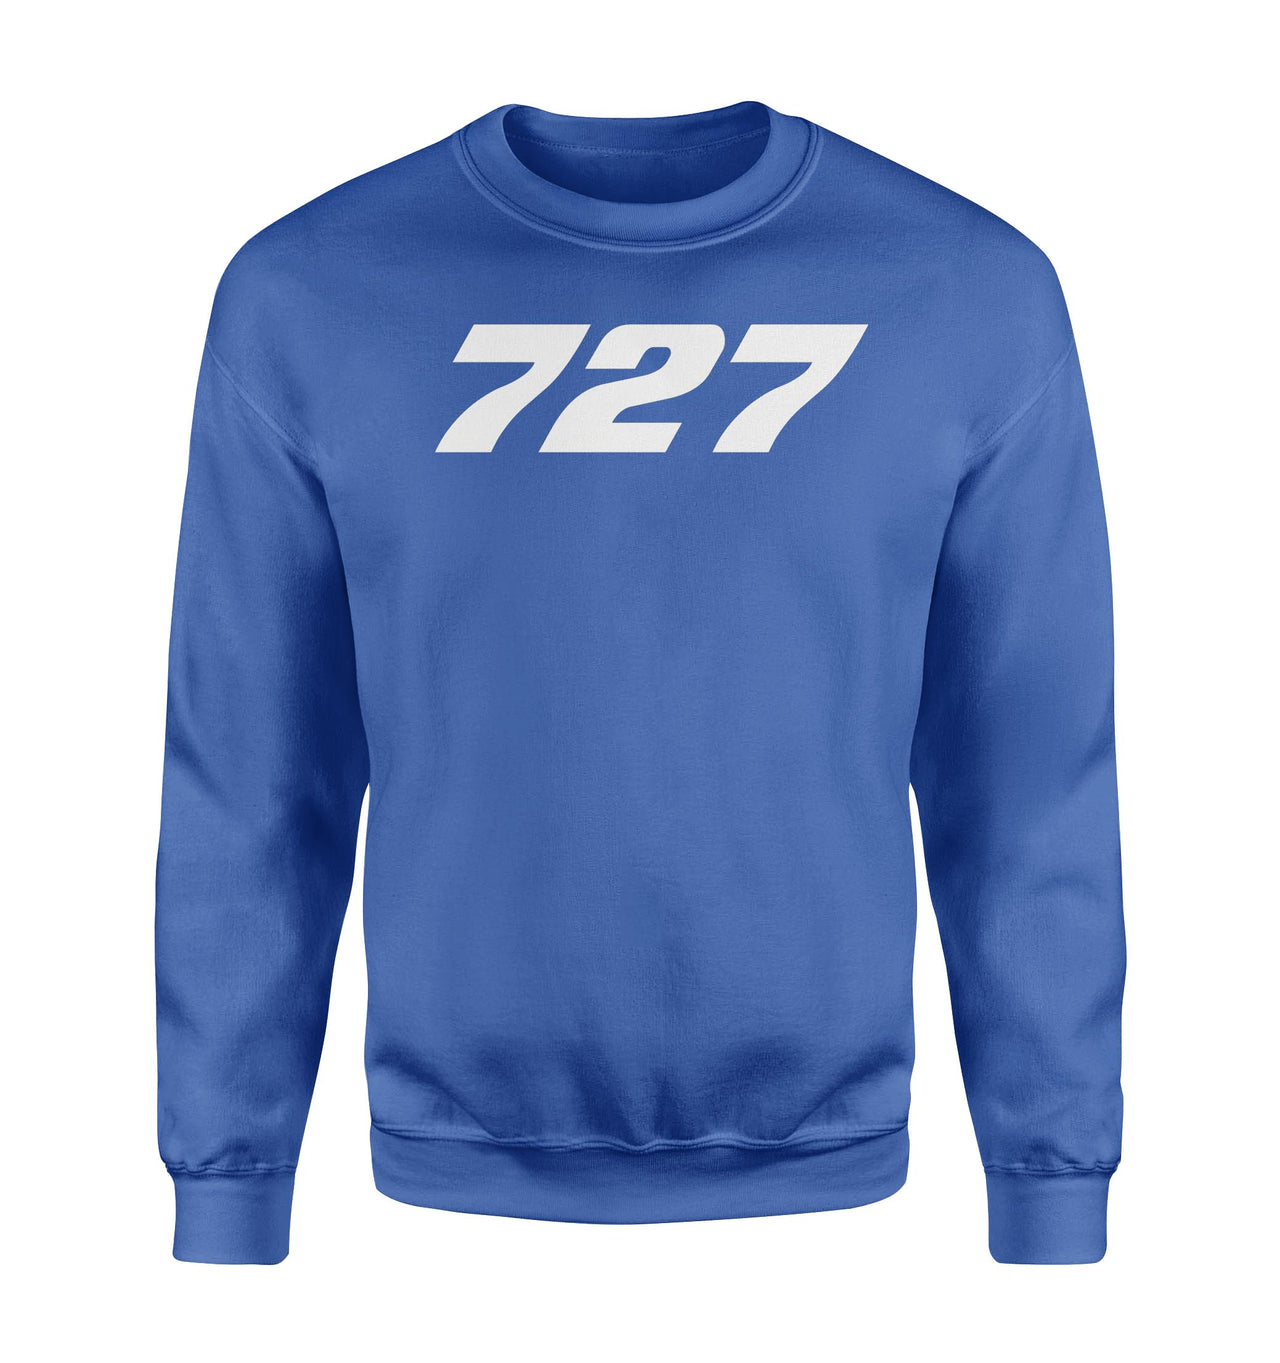 727 Flat Text Designed Sweatshirts